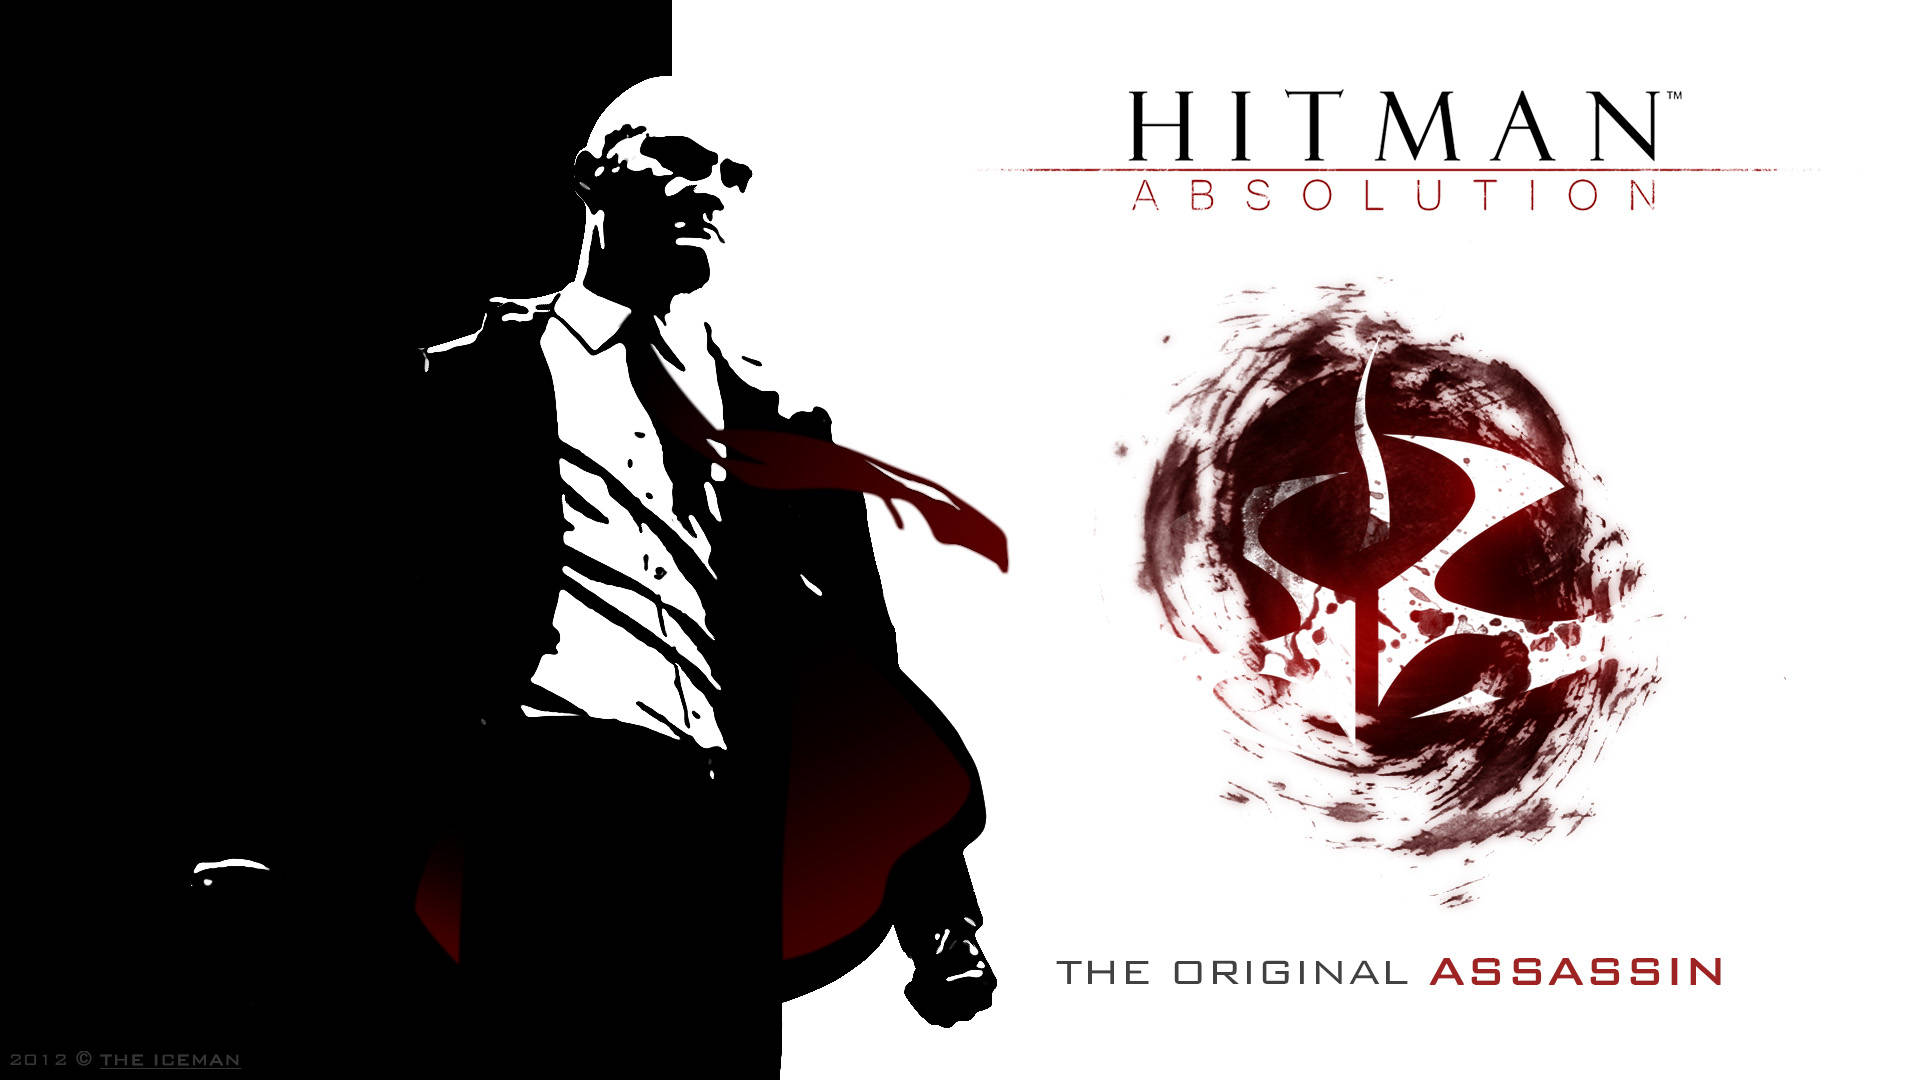 Hitman Absolution Hd Original Assassin Wallpaper